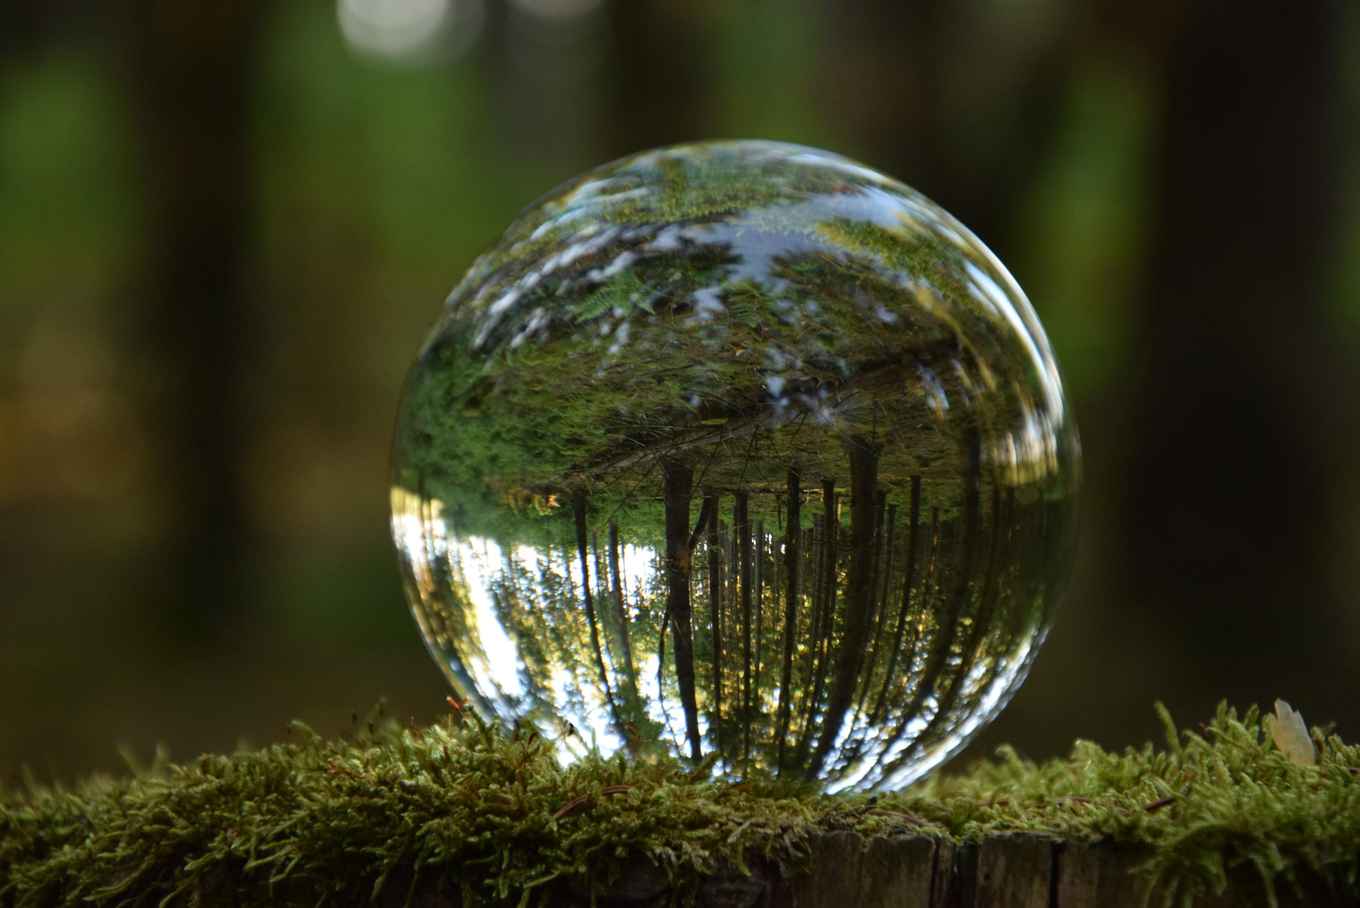 Glass sphere